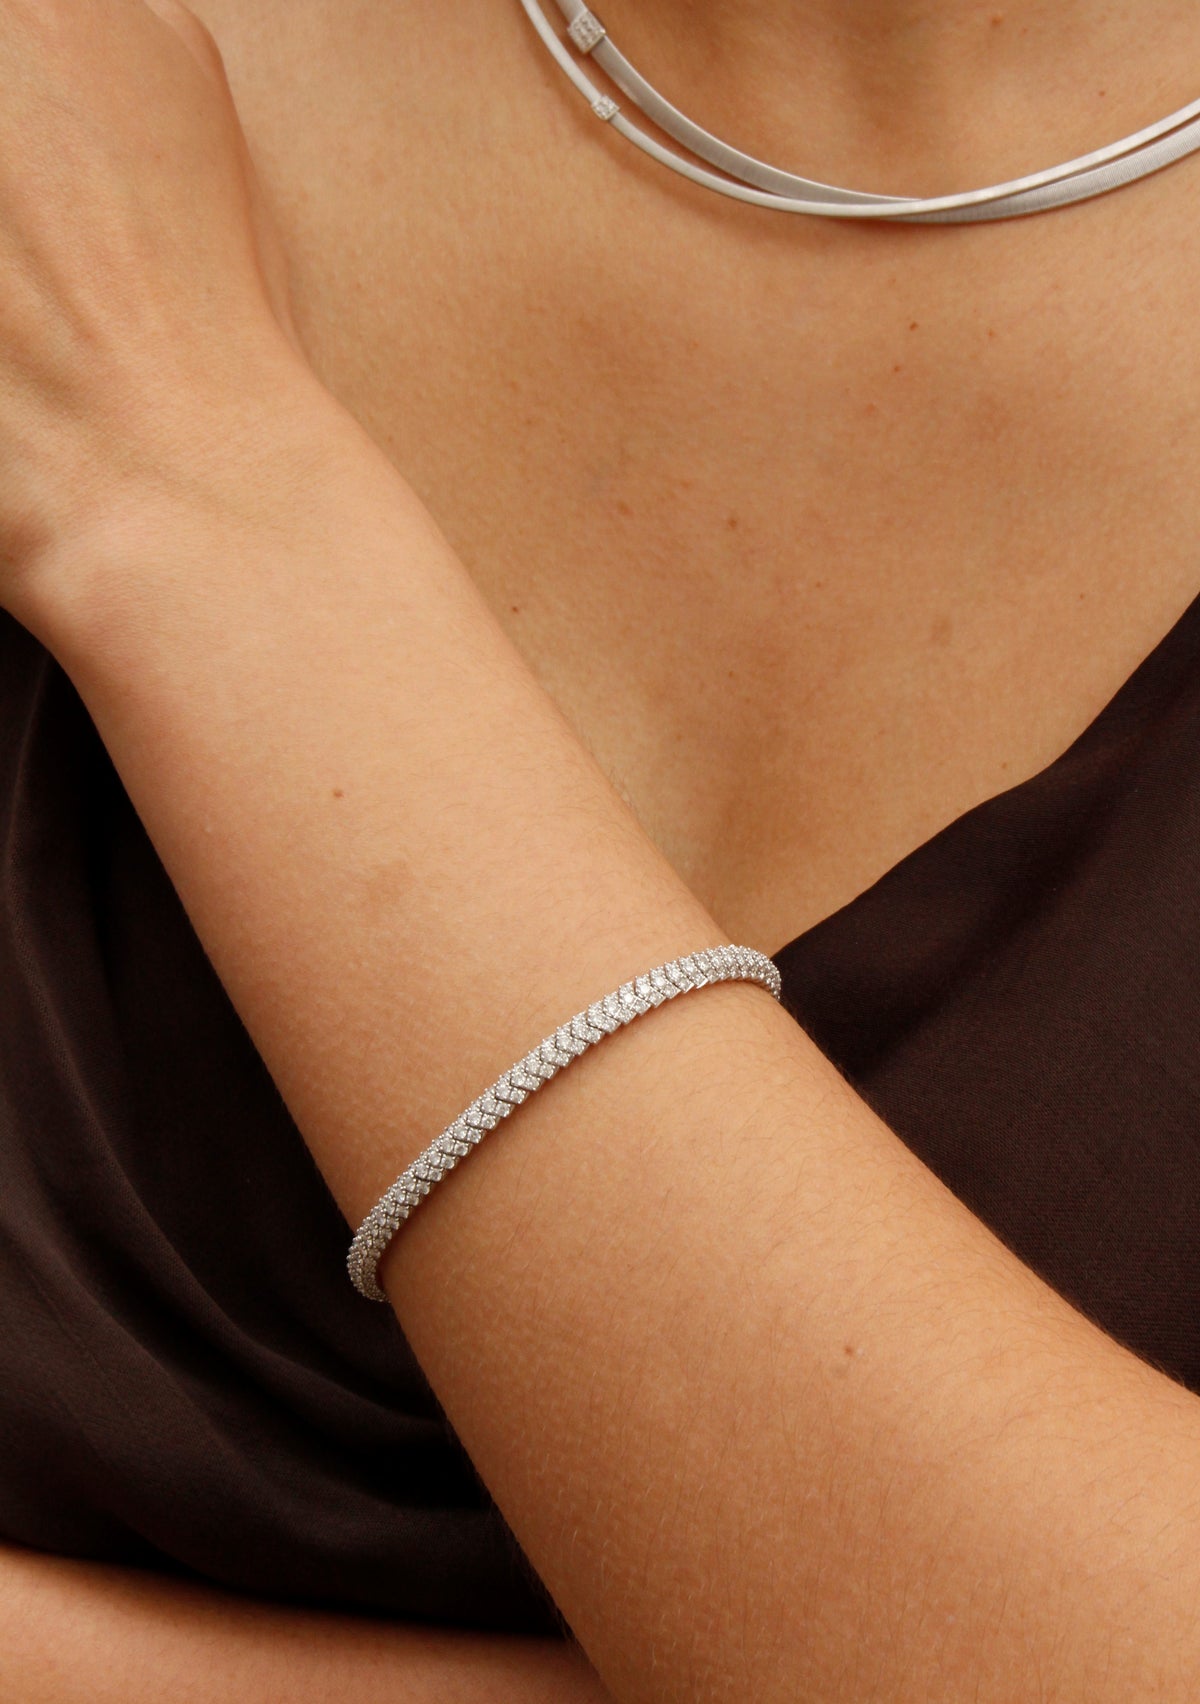 Al Coro Amori Bracelet in 18k White Gold with Diamonds - Orsini Jewellers NZ